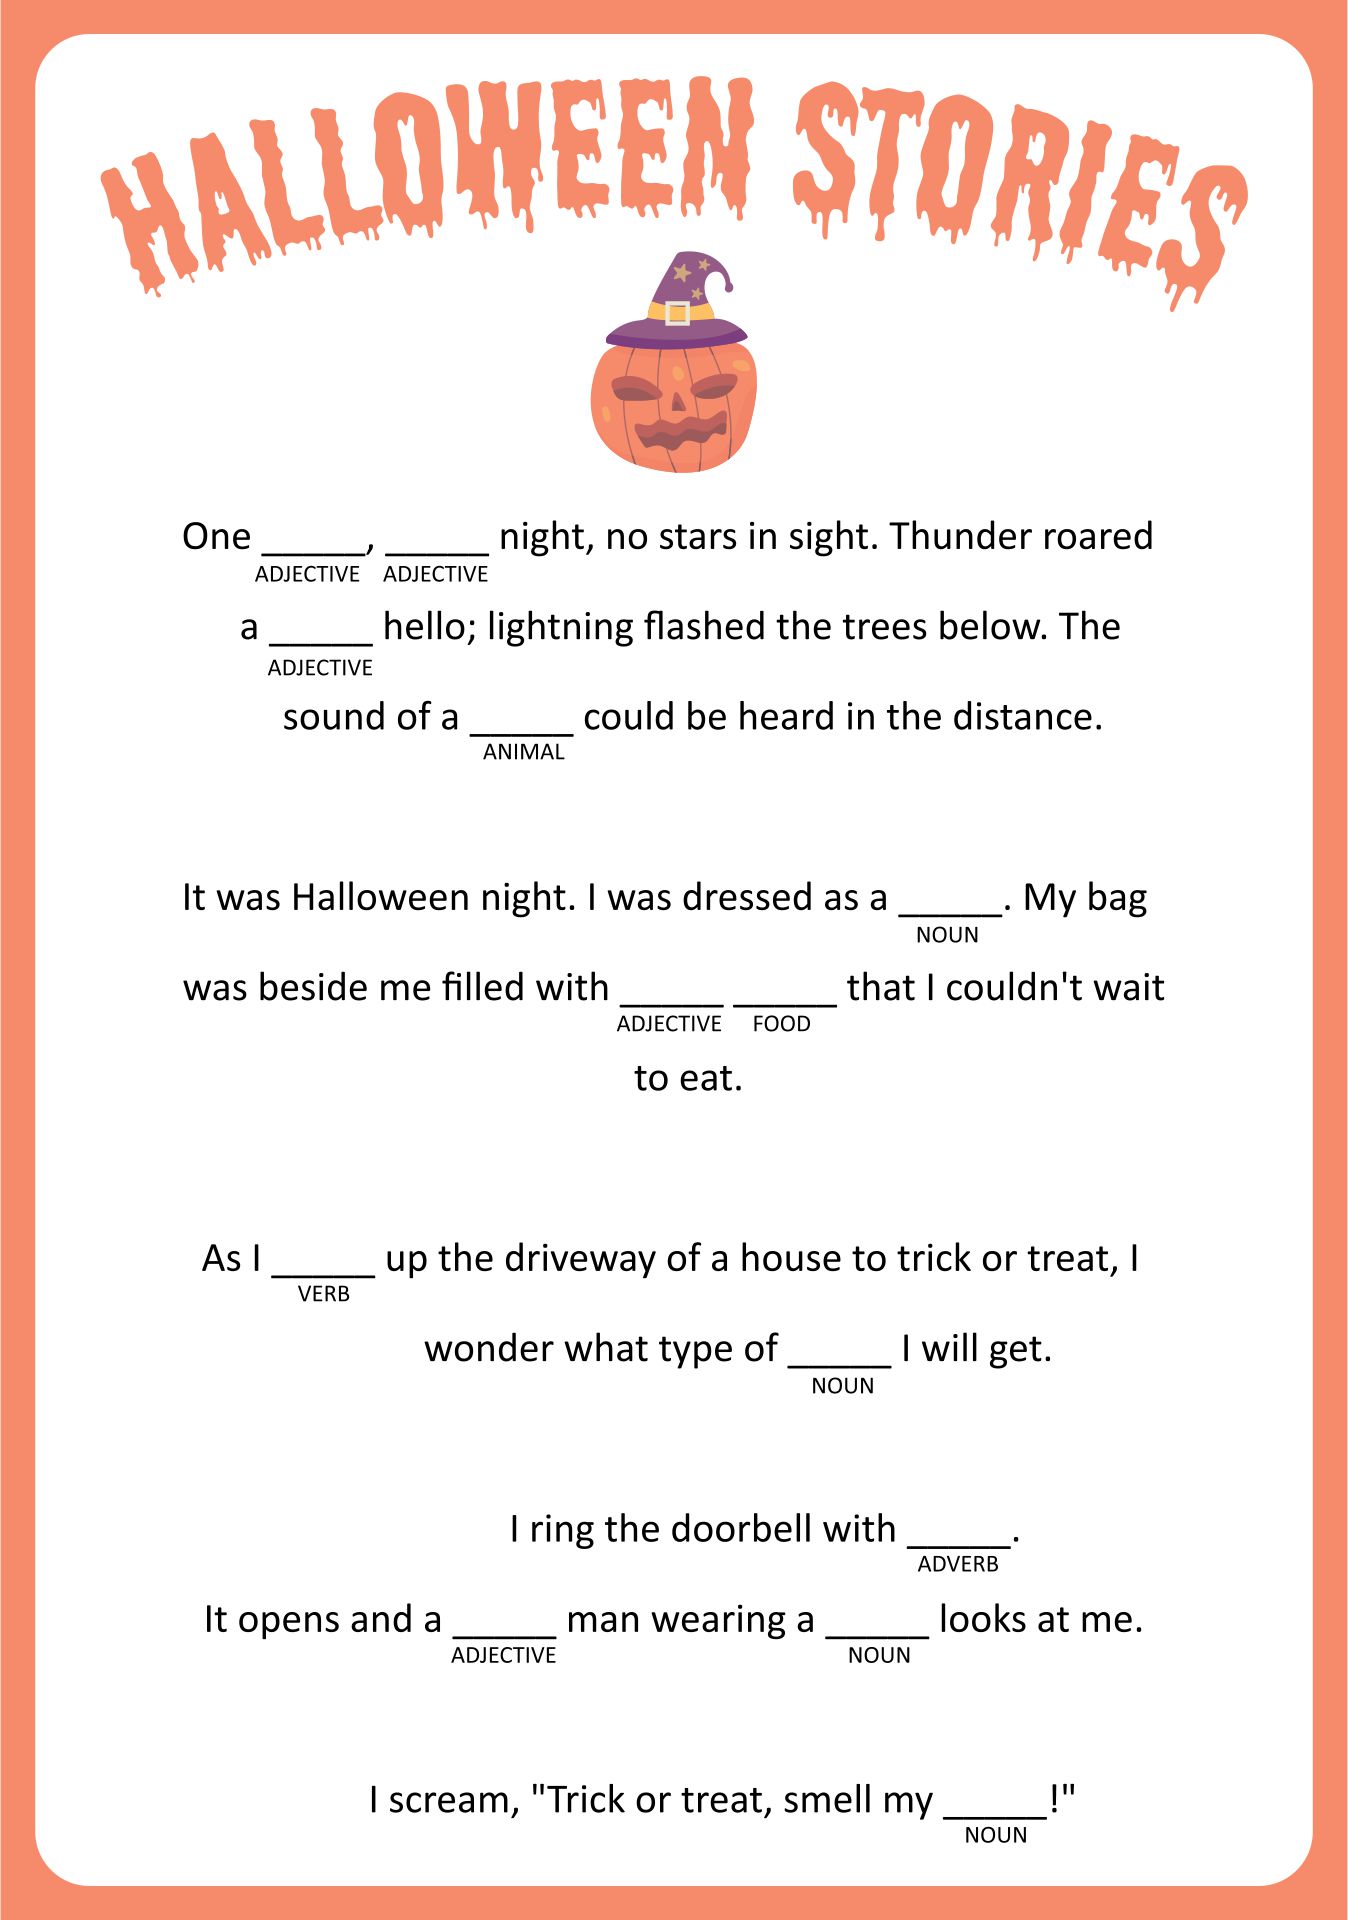 Printable Halloween Stories